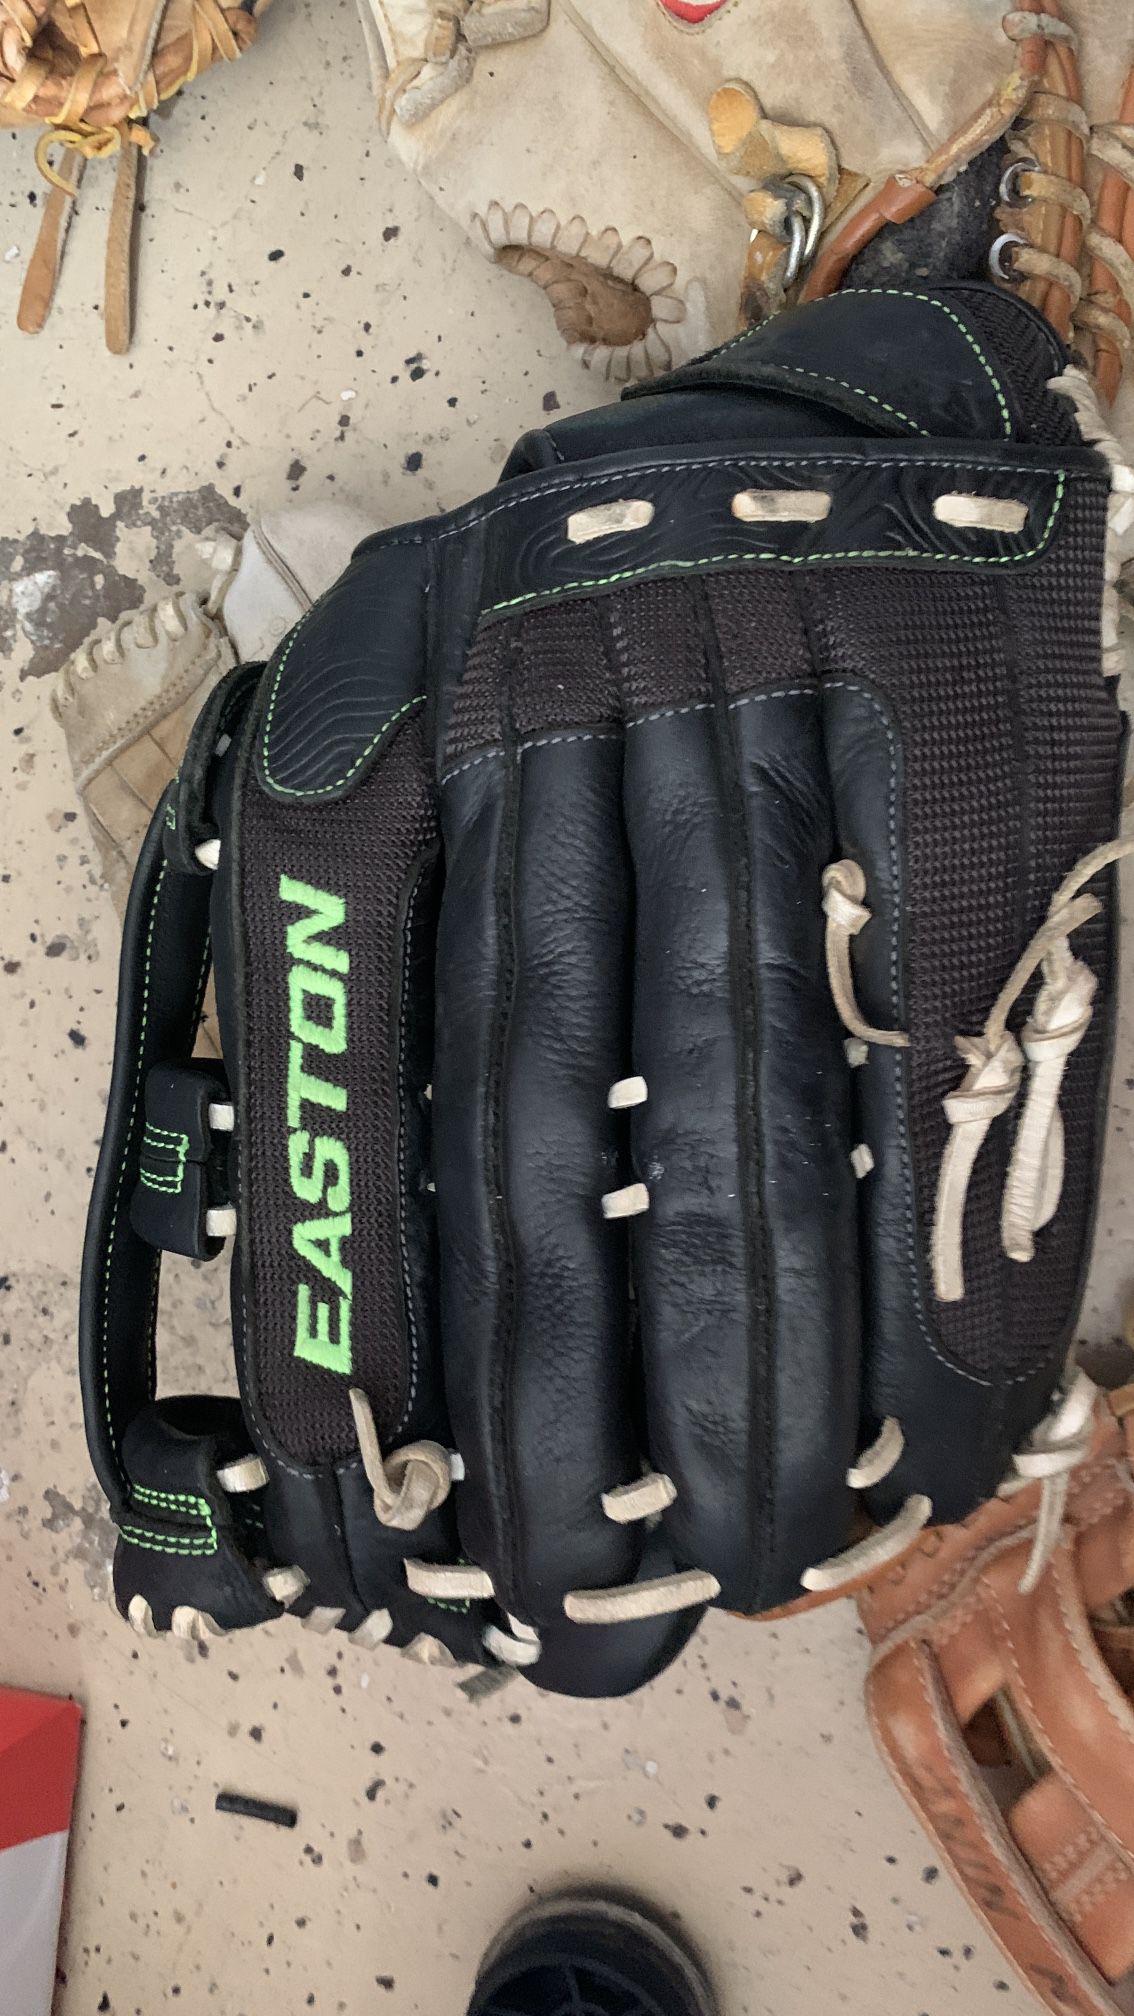 Easton Baseball Glove 